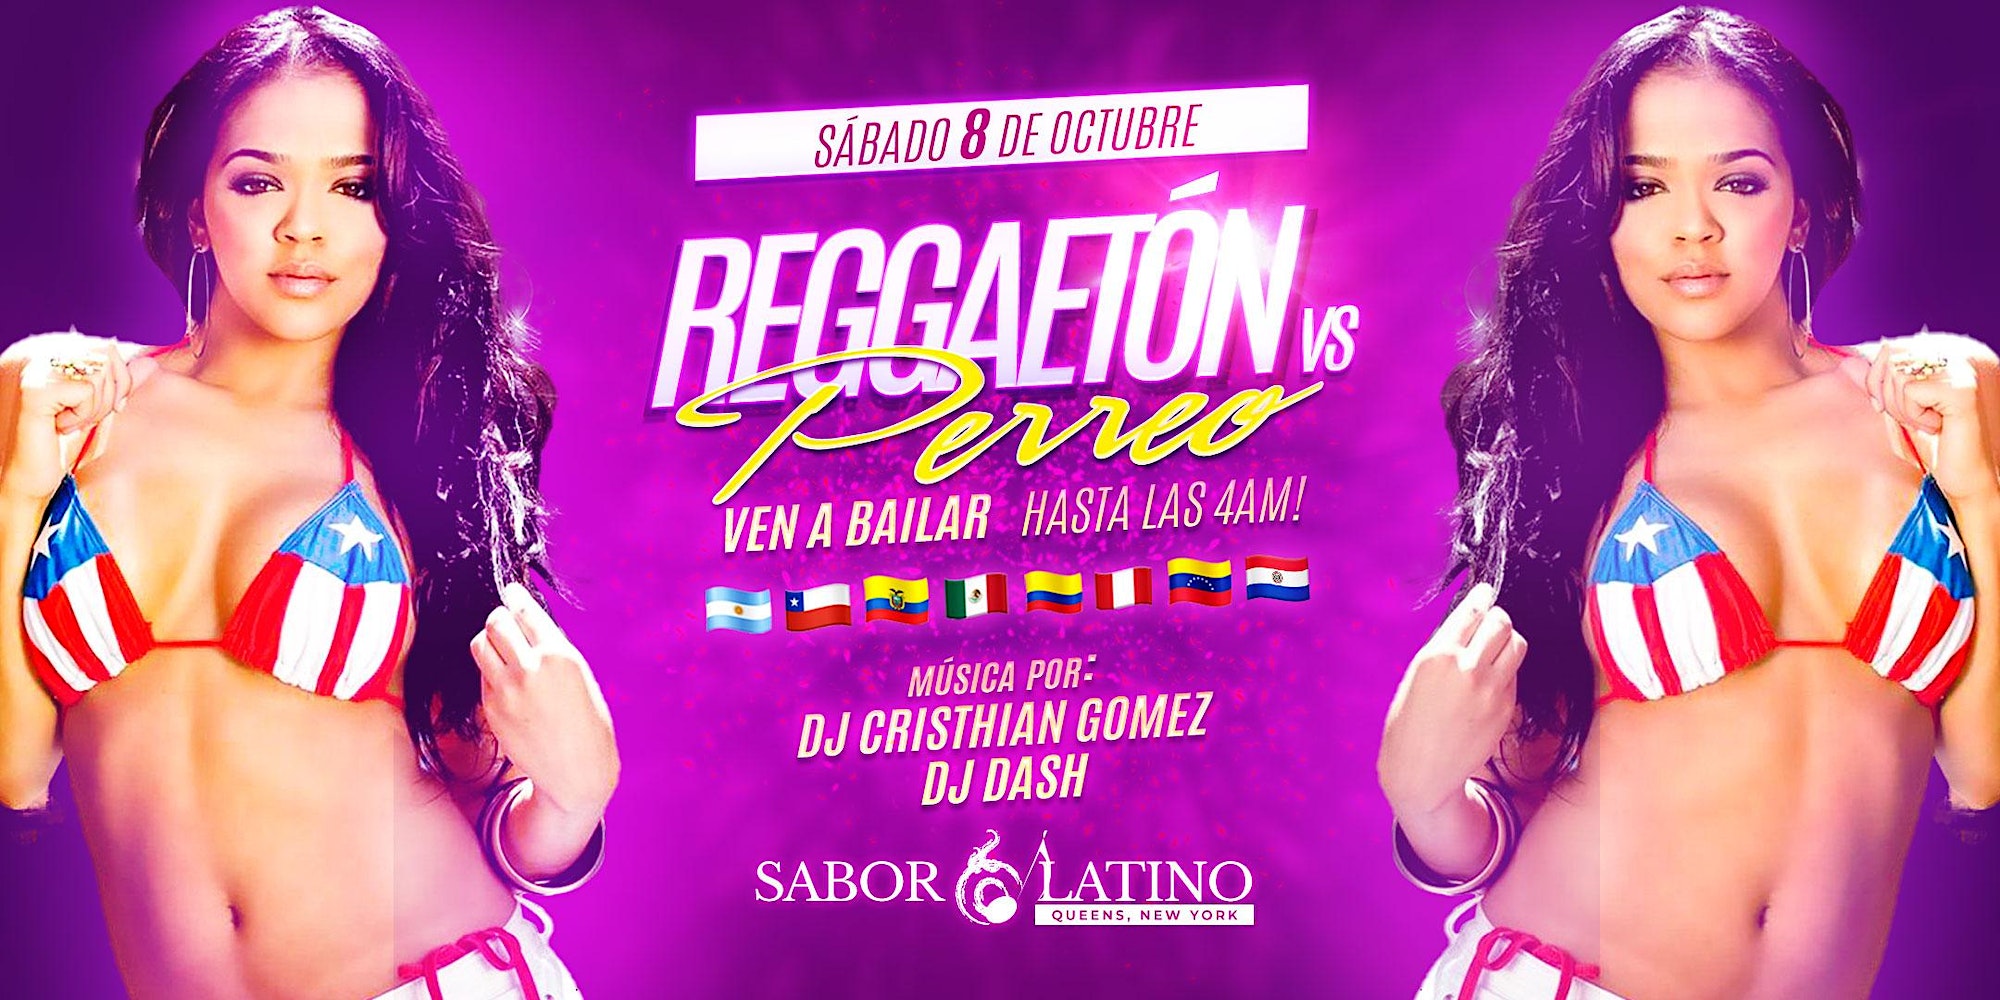 Tickets for Reggaeton, Reggaeton Y Mas Reggaeton in Queens from V5 Group